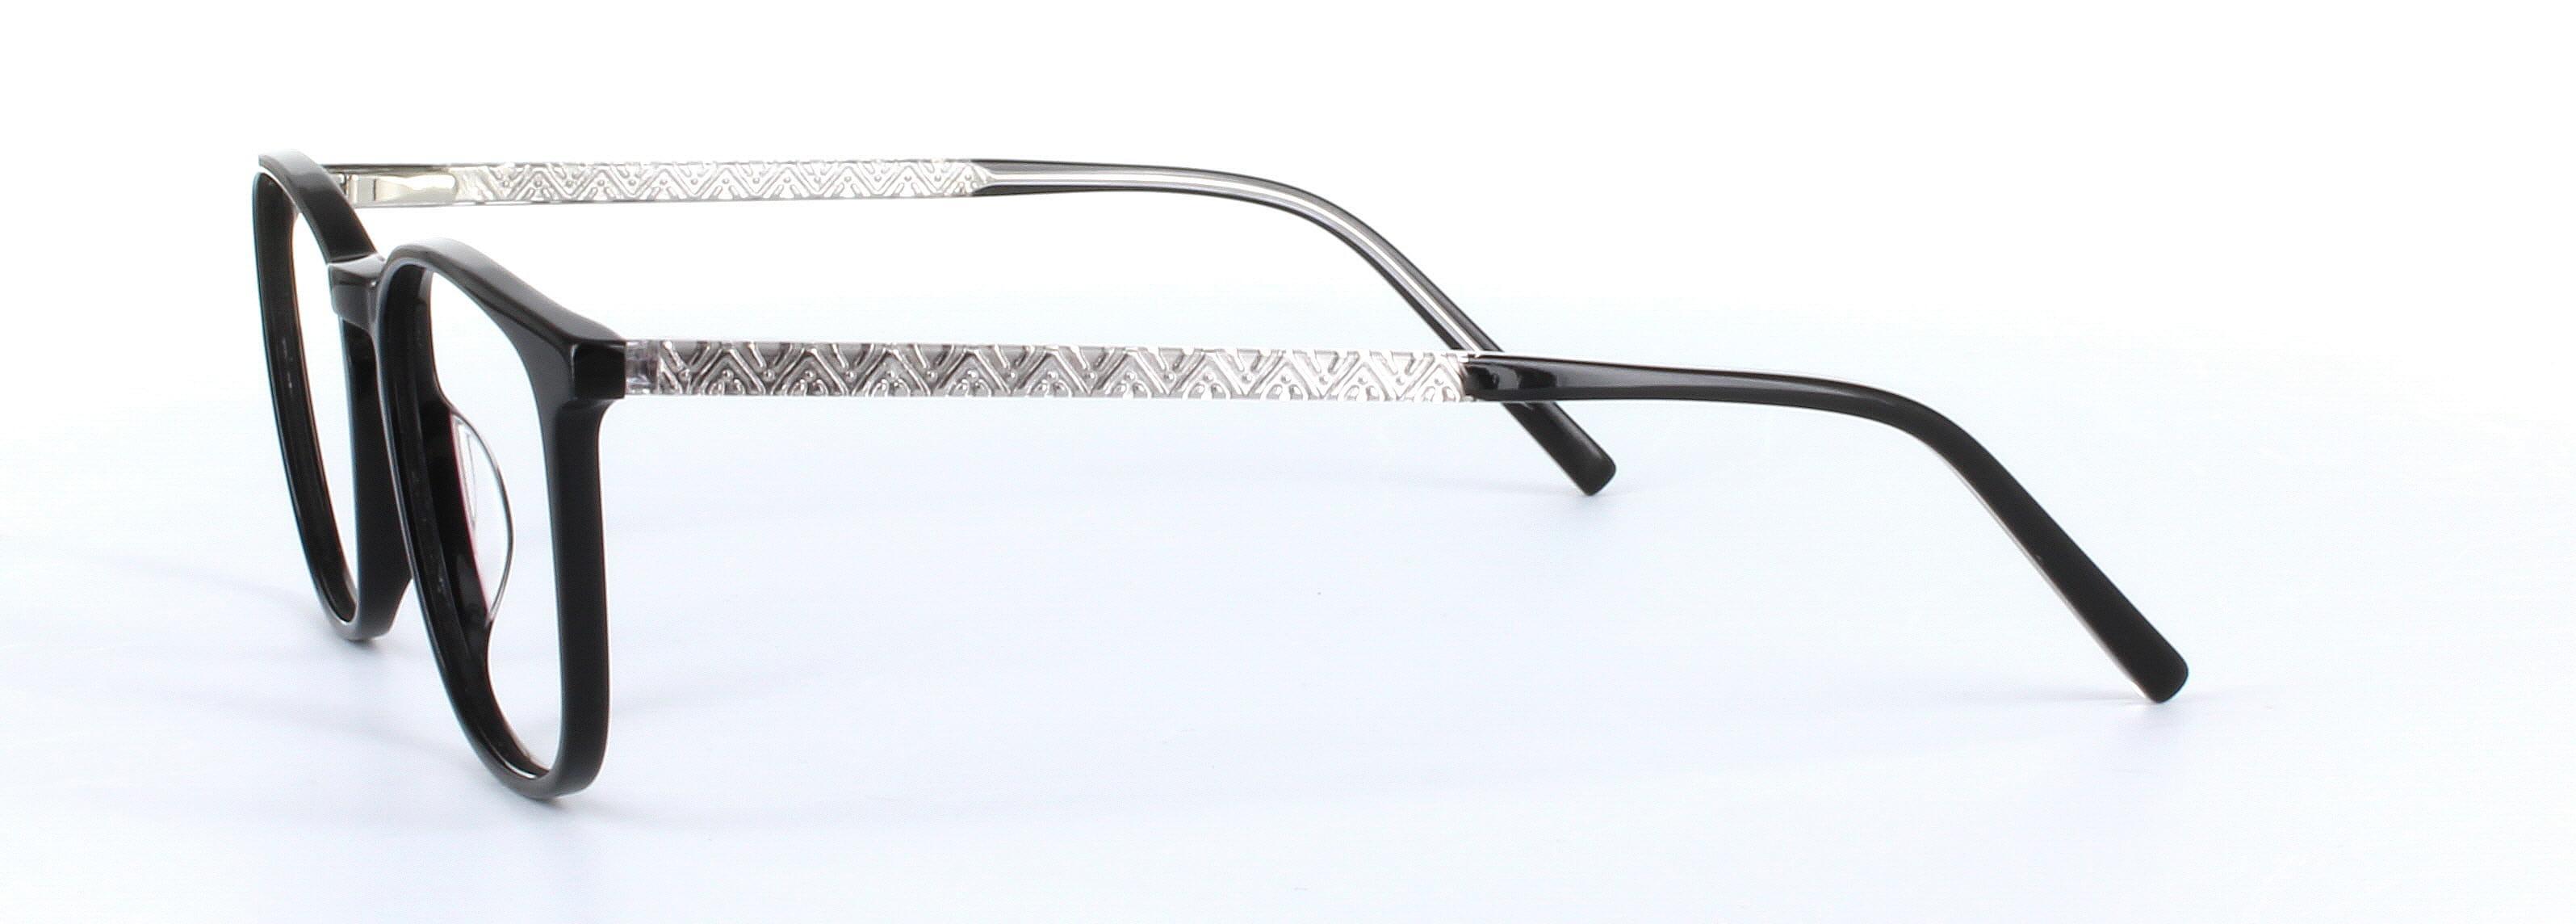 Mariana Black Full Rim Round Plastic Glasses - Image View 2